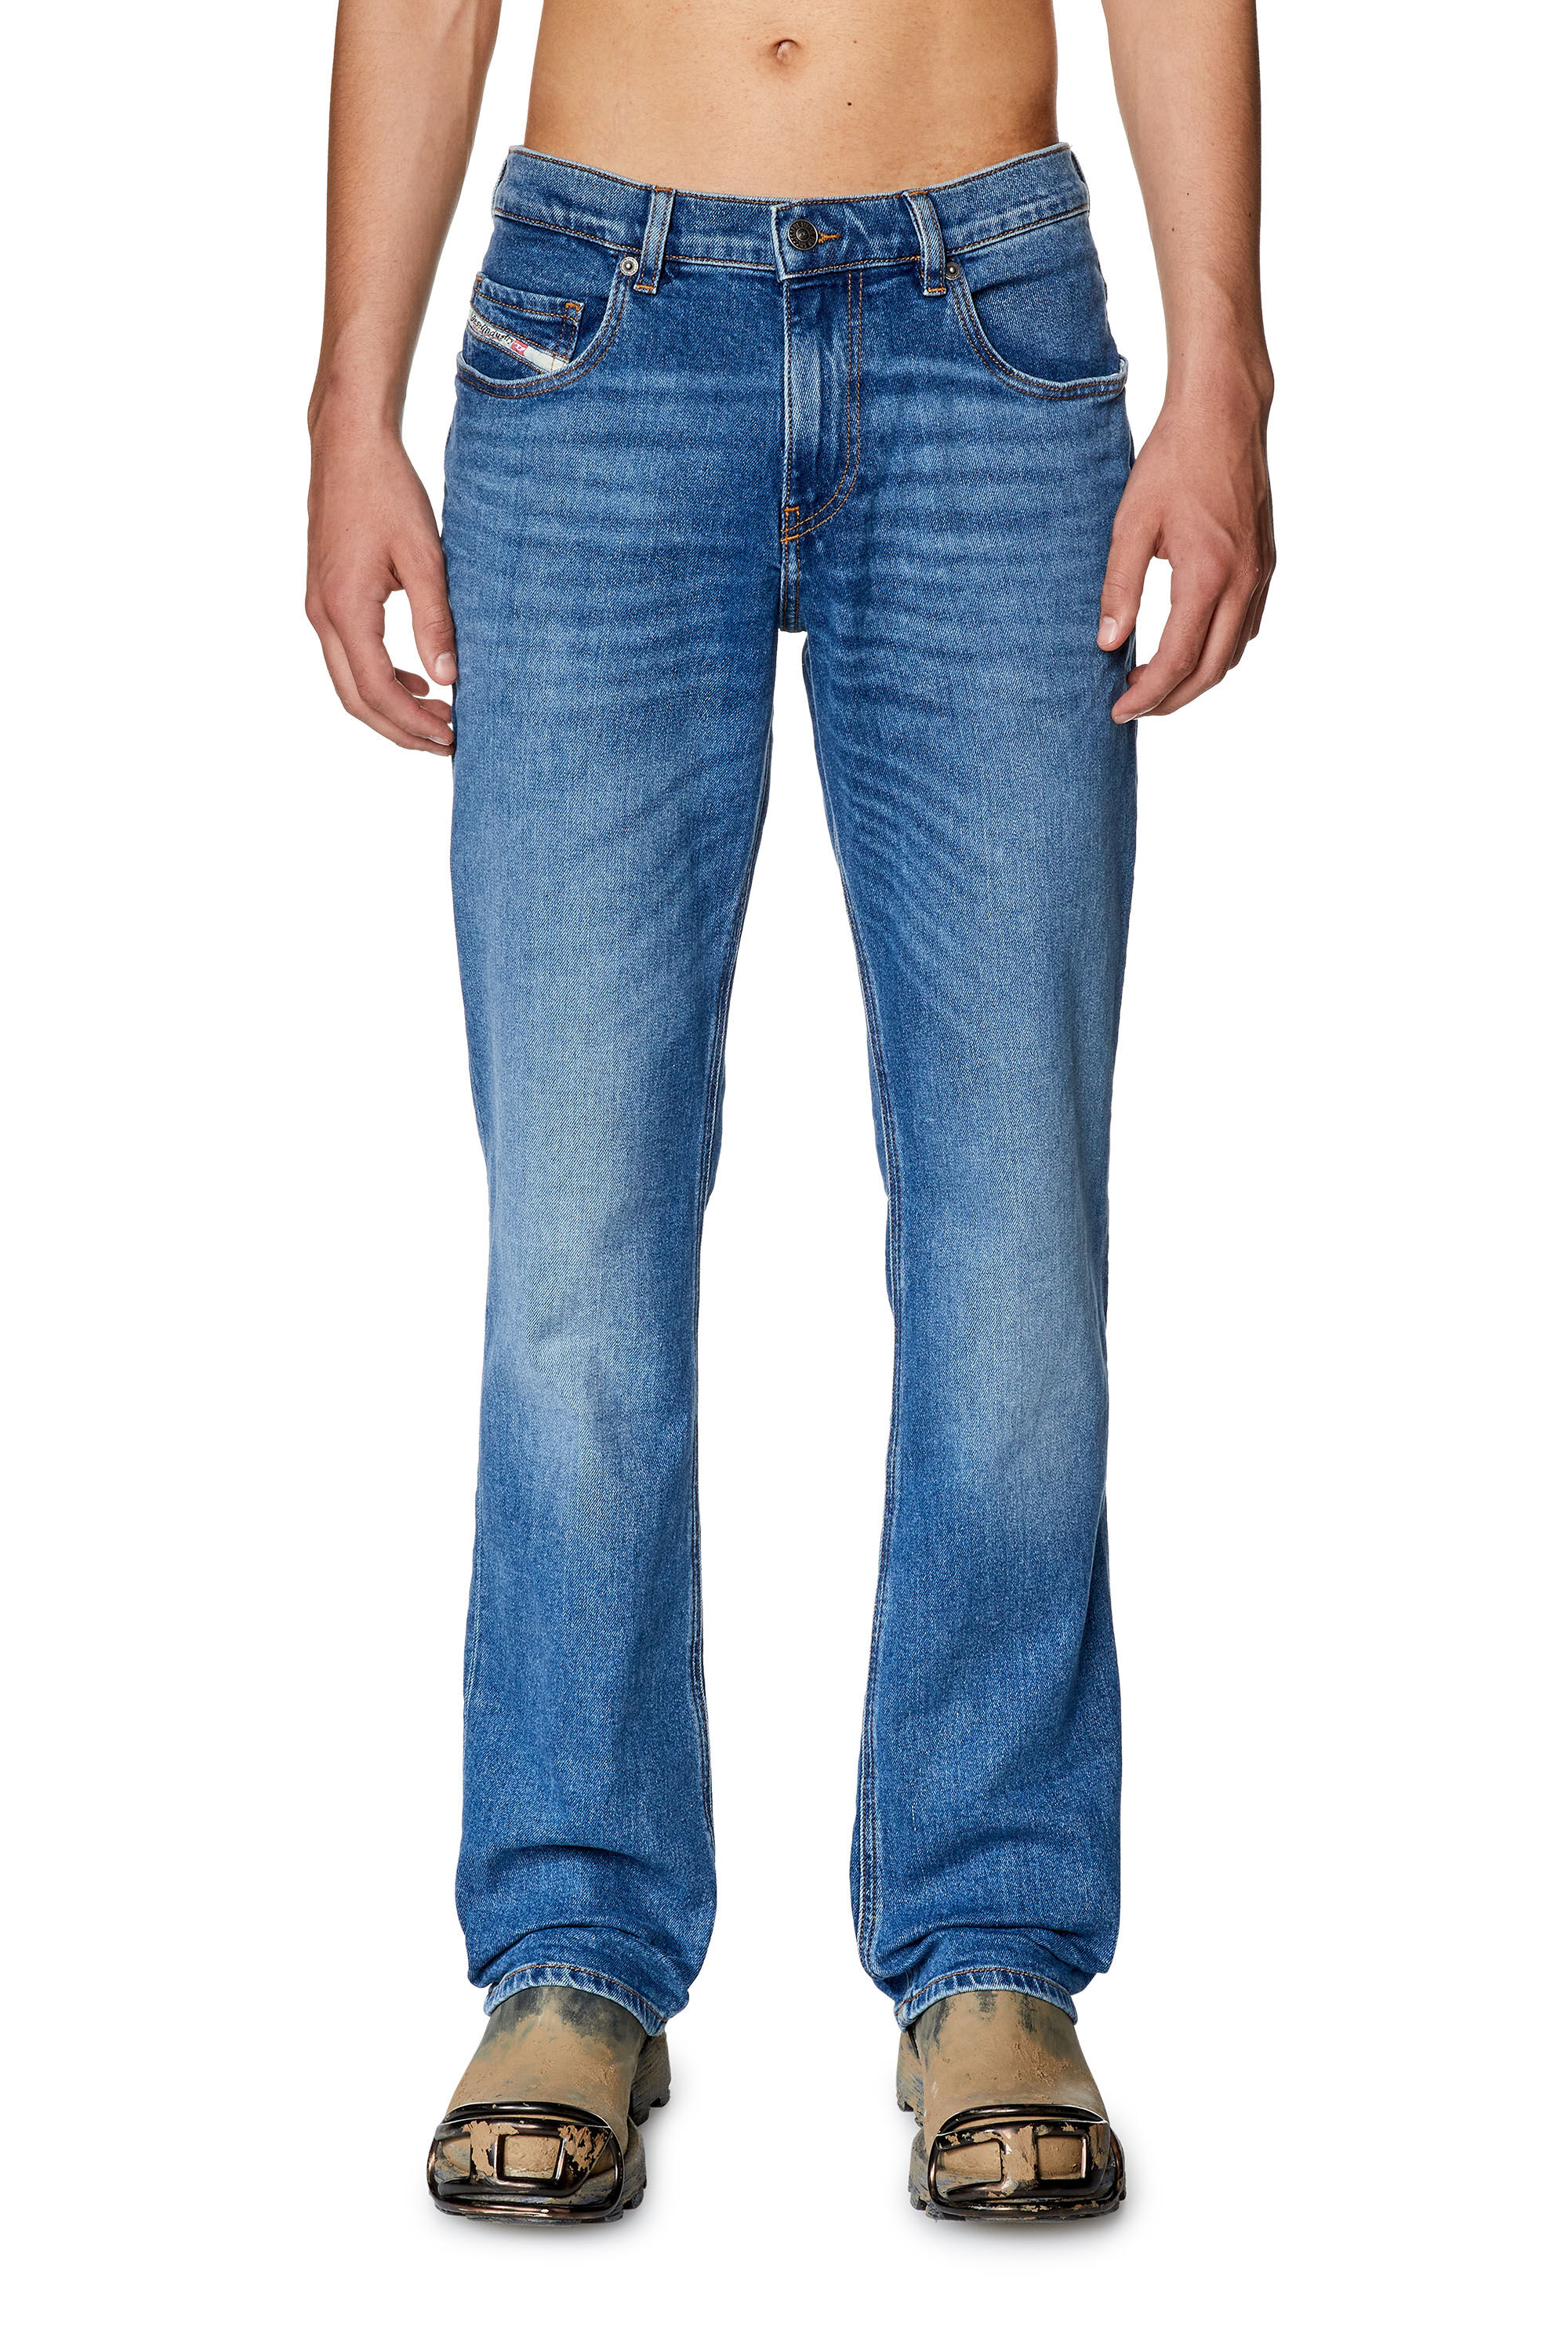 Men's Bootcut Jeans, Medium blue